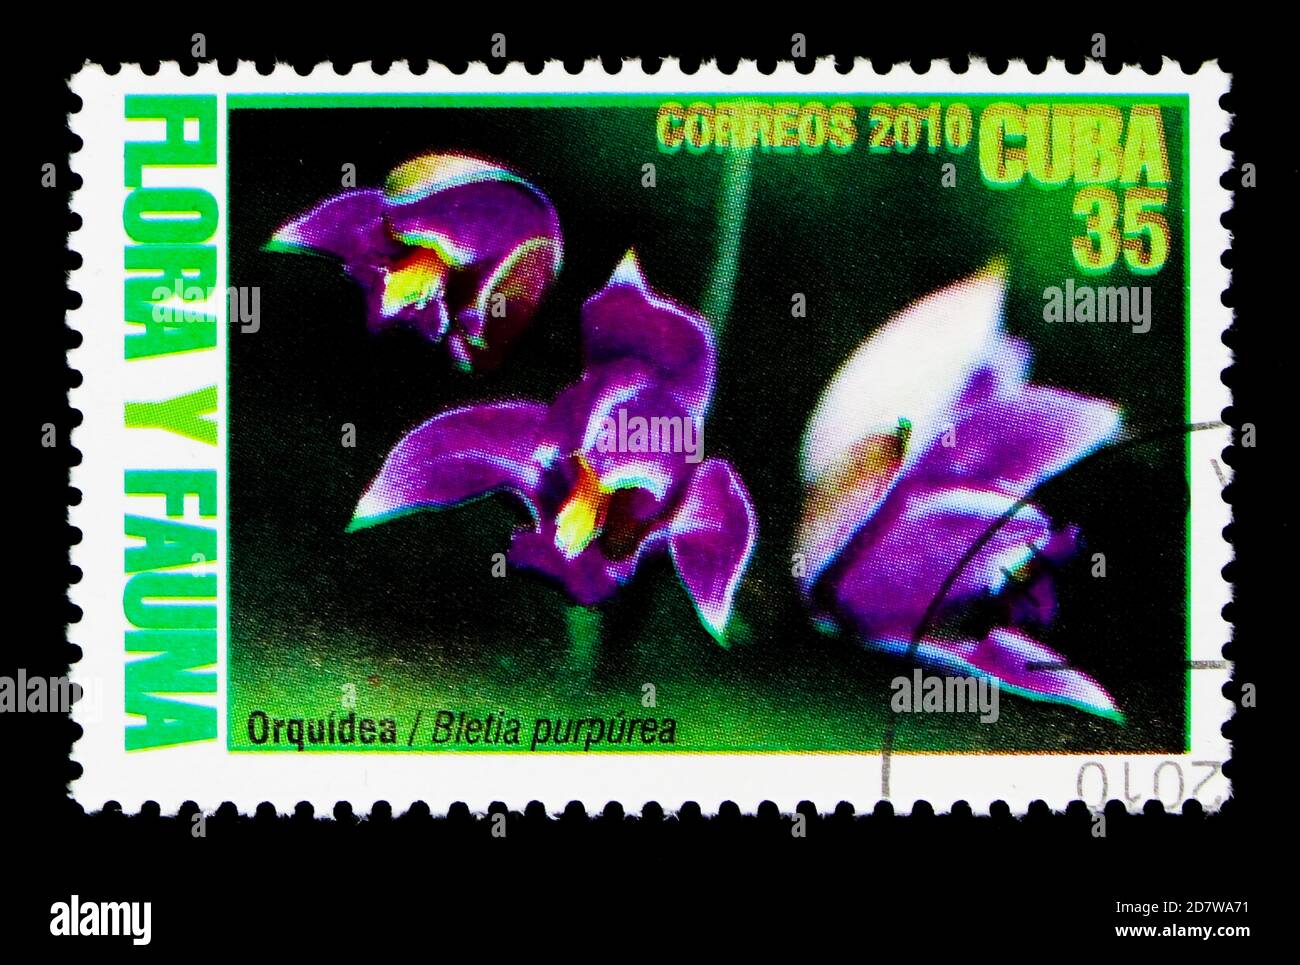 MOSCOW, RUSSIA - MARCH 28, 2018: A stamp printed in Cuba shows Bletia purpurea, Flora & Fauna serie, circa 2010 Stock Photo